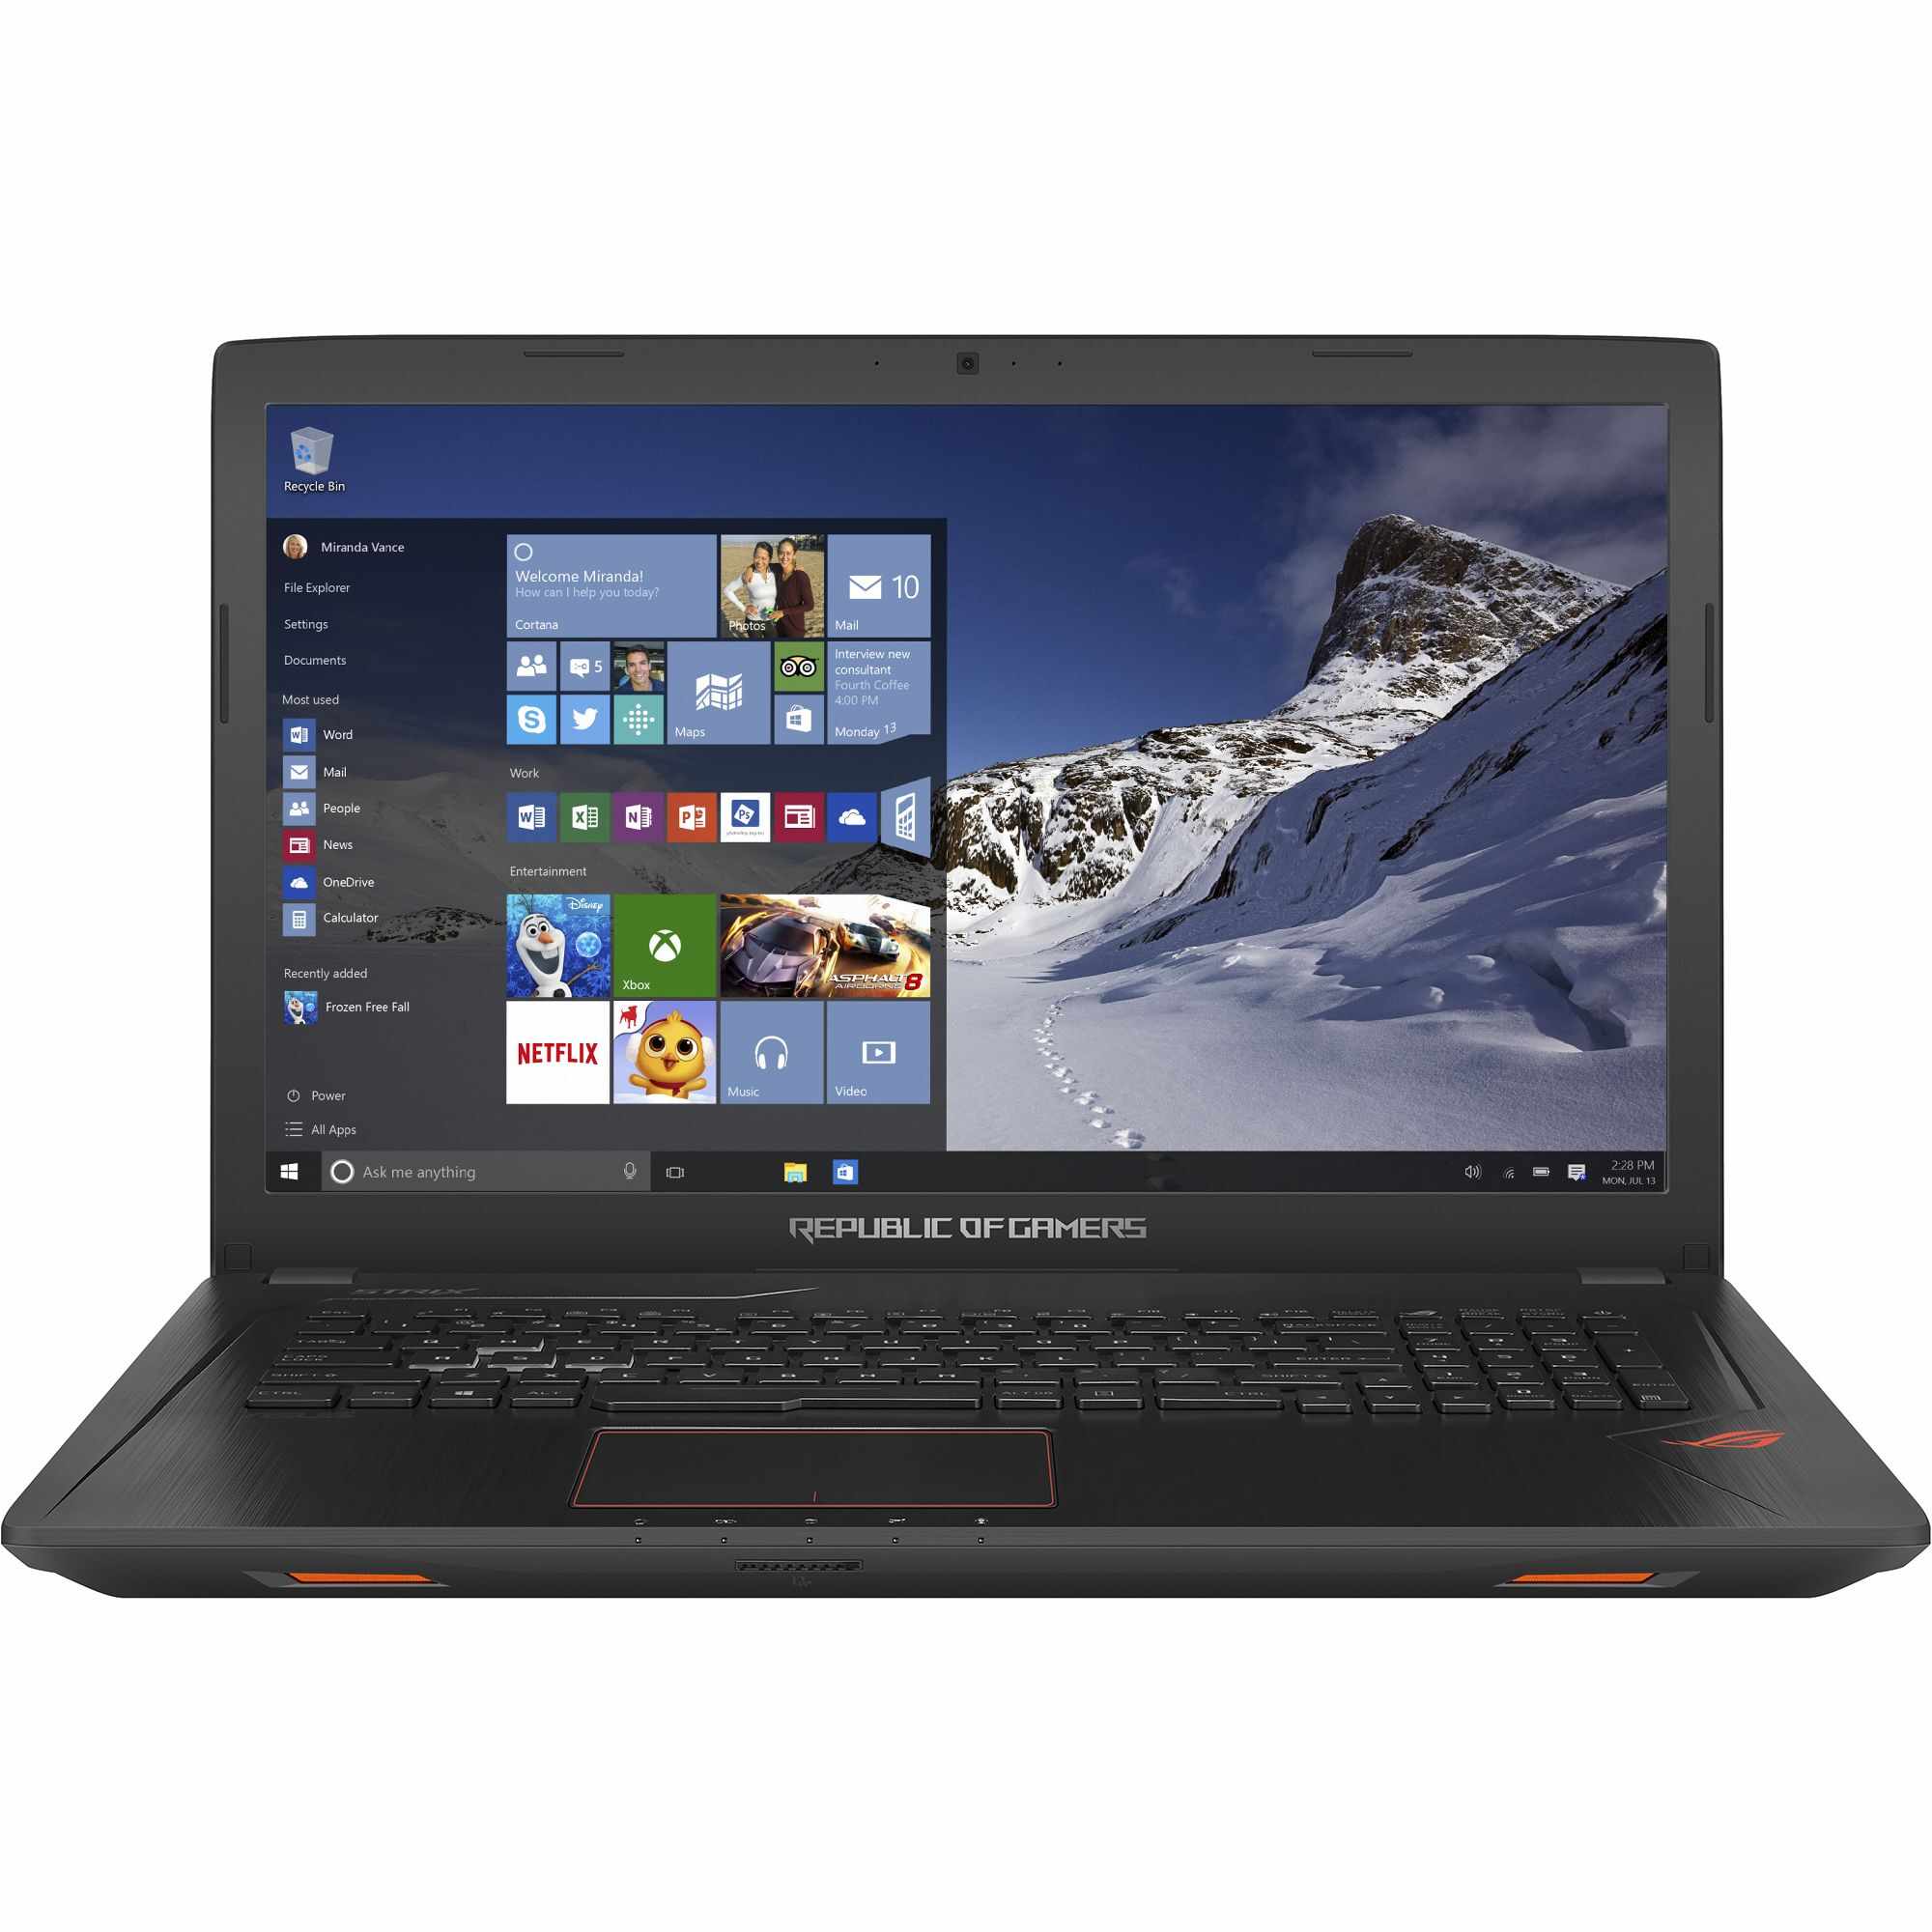 Laptop Gaming ASUS ROG GL753VD, Intel Core i7-7700HQ, 8GB DDR4, HDD 1TB, nVidia GeForce GTX 1050, Windows 10